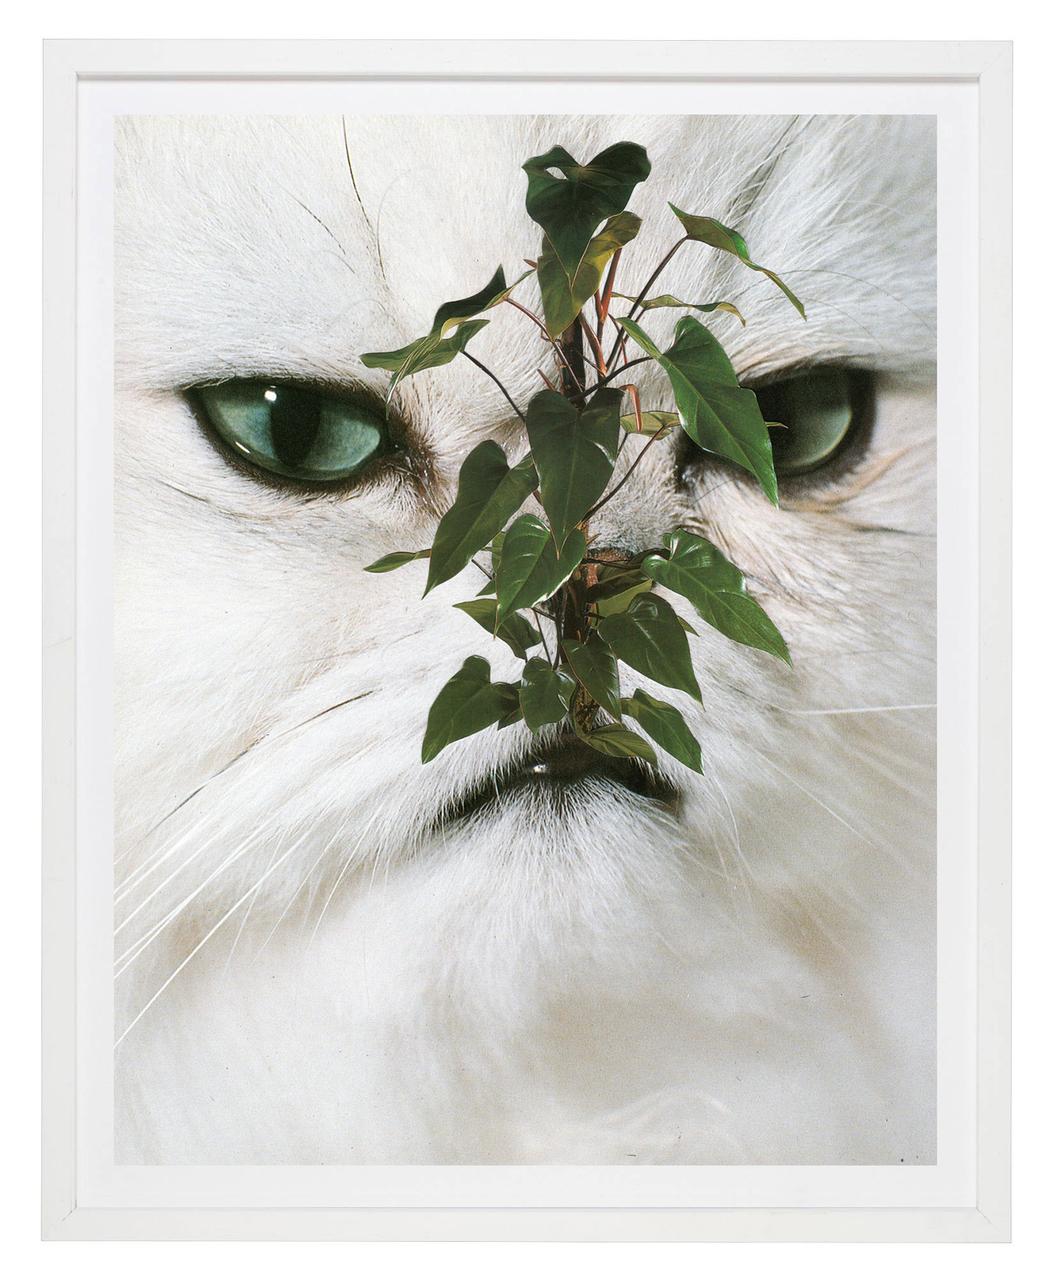 cats&plants4